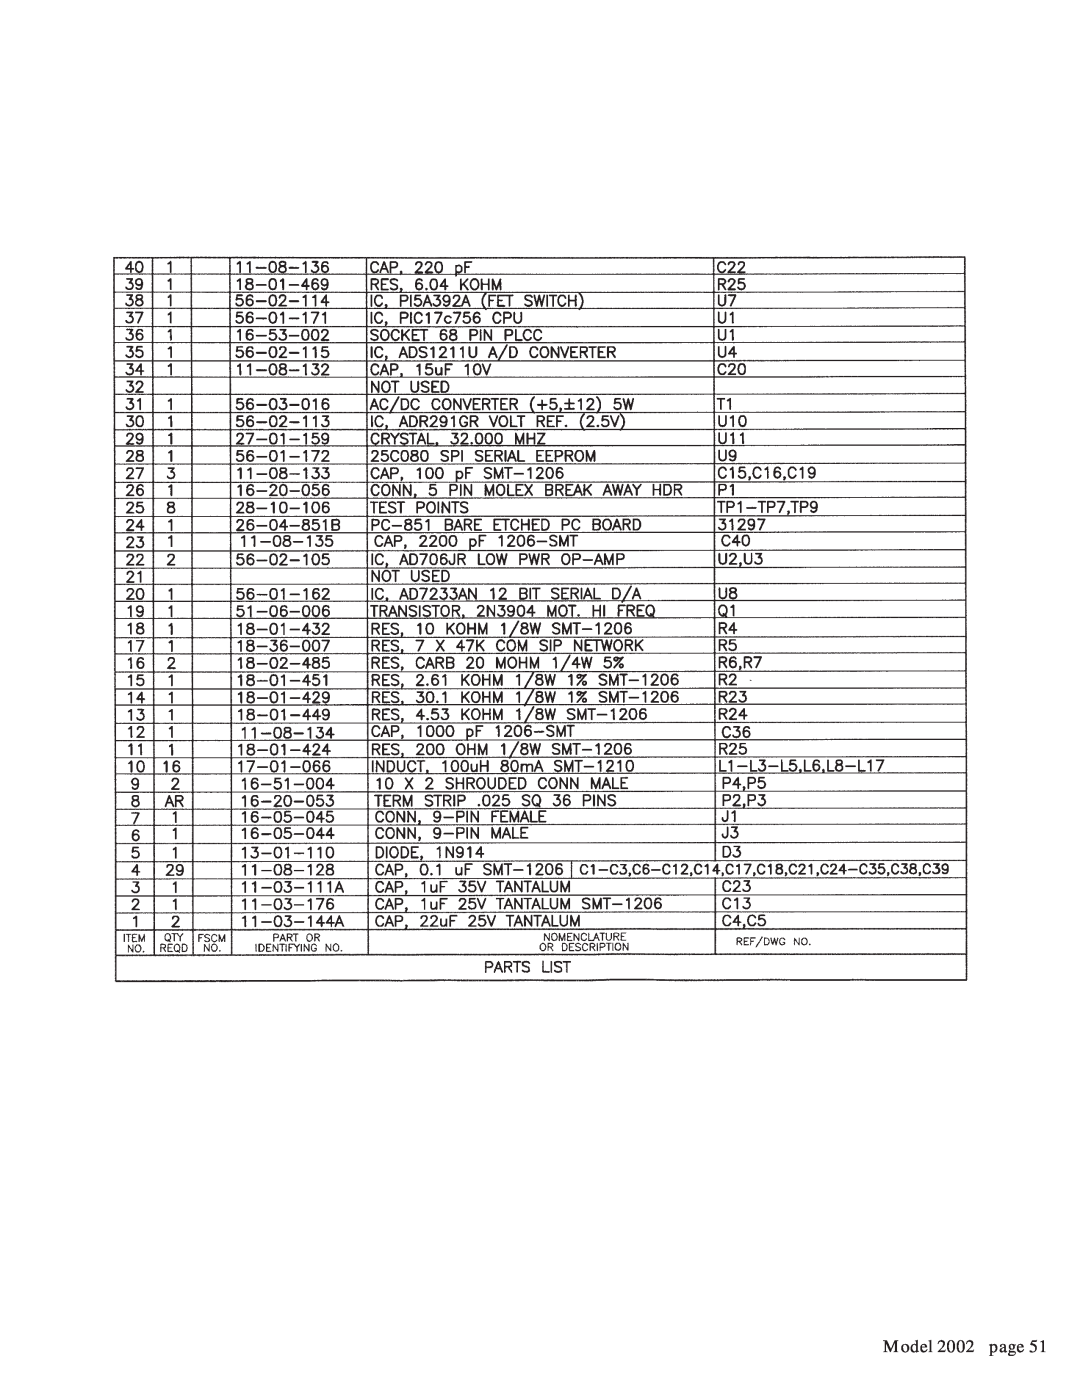 Teledyne instruction manual Model 2002 page 